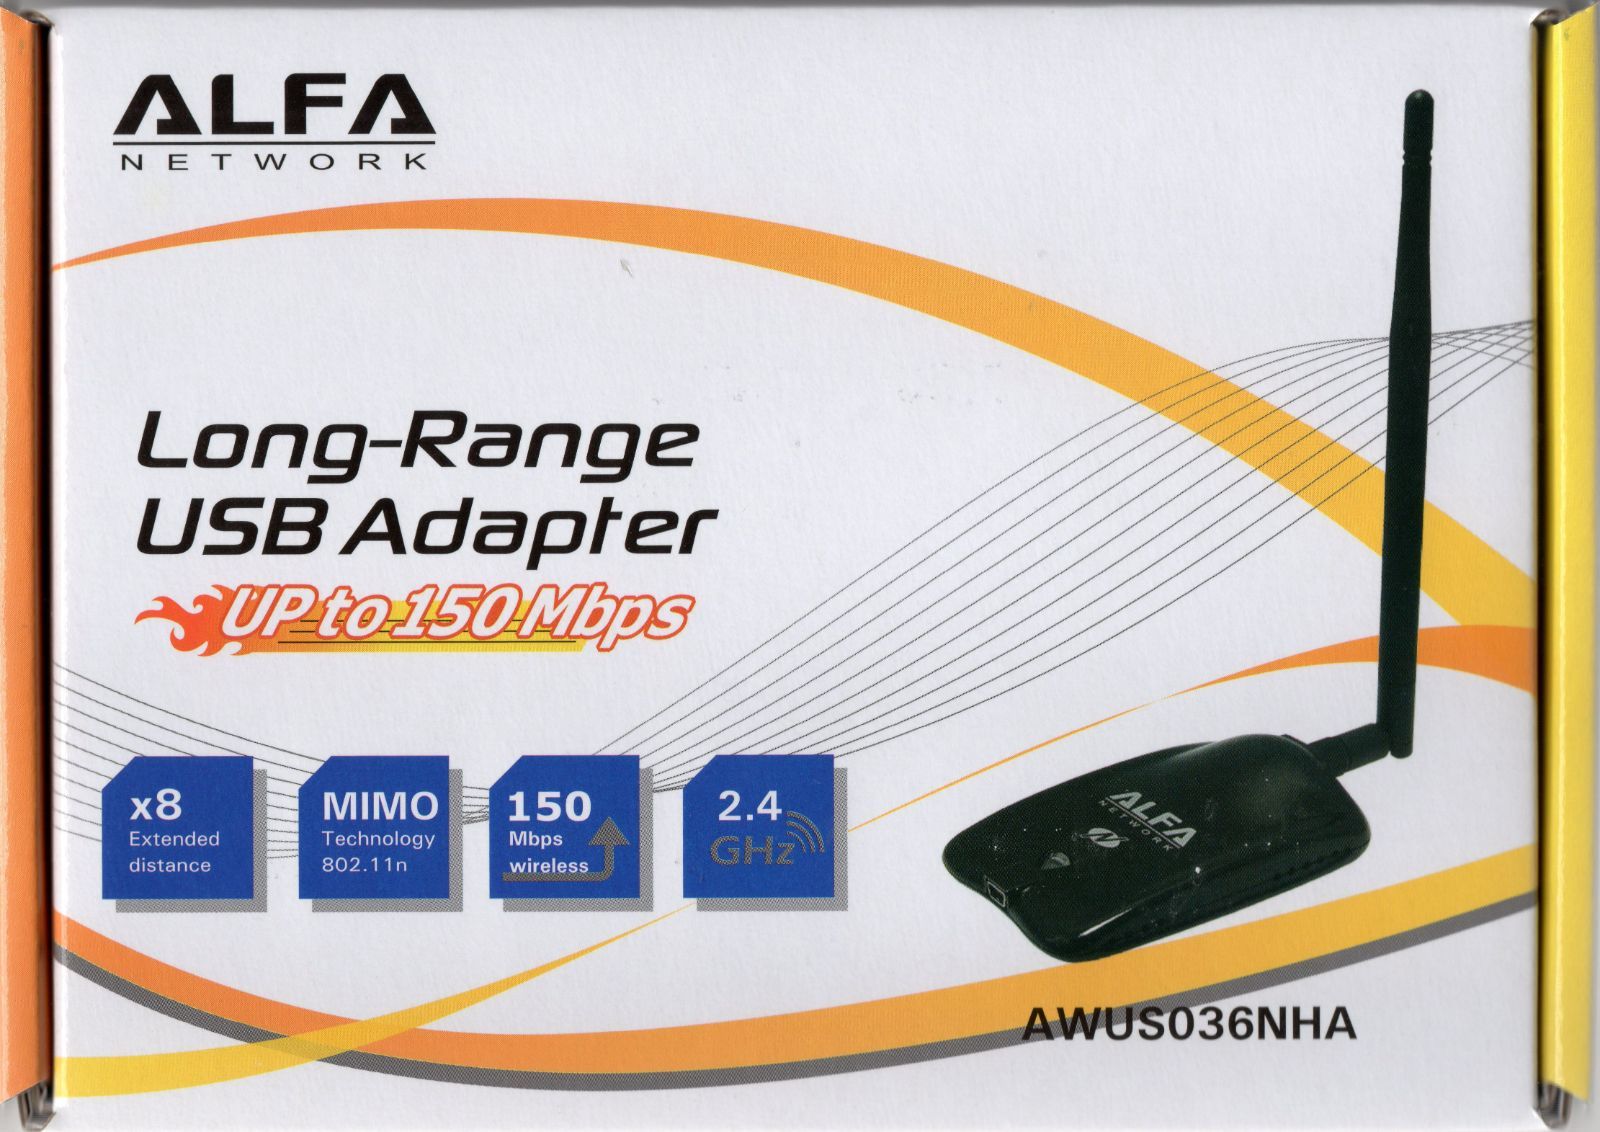 ALFA AWUS036NHA無線LAN USBアダプター Atheros AR9271 11/b/g/n Windowds Kali Linux  対応【匿名配送】ALFA NETWORK